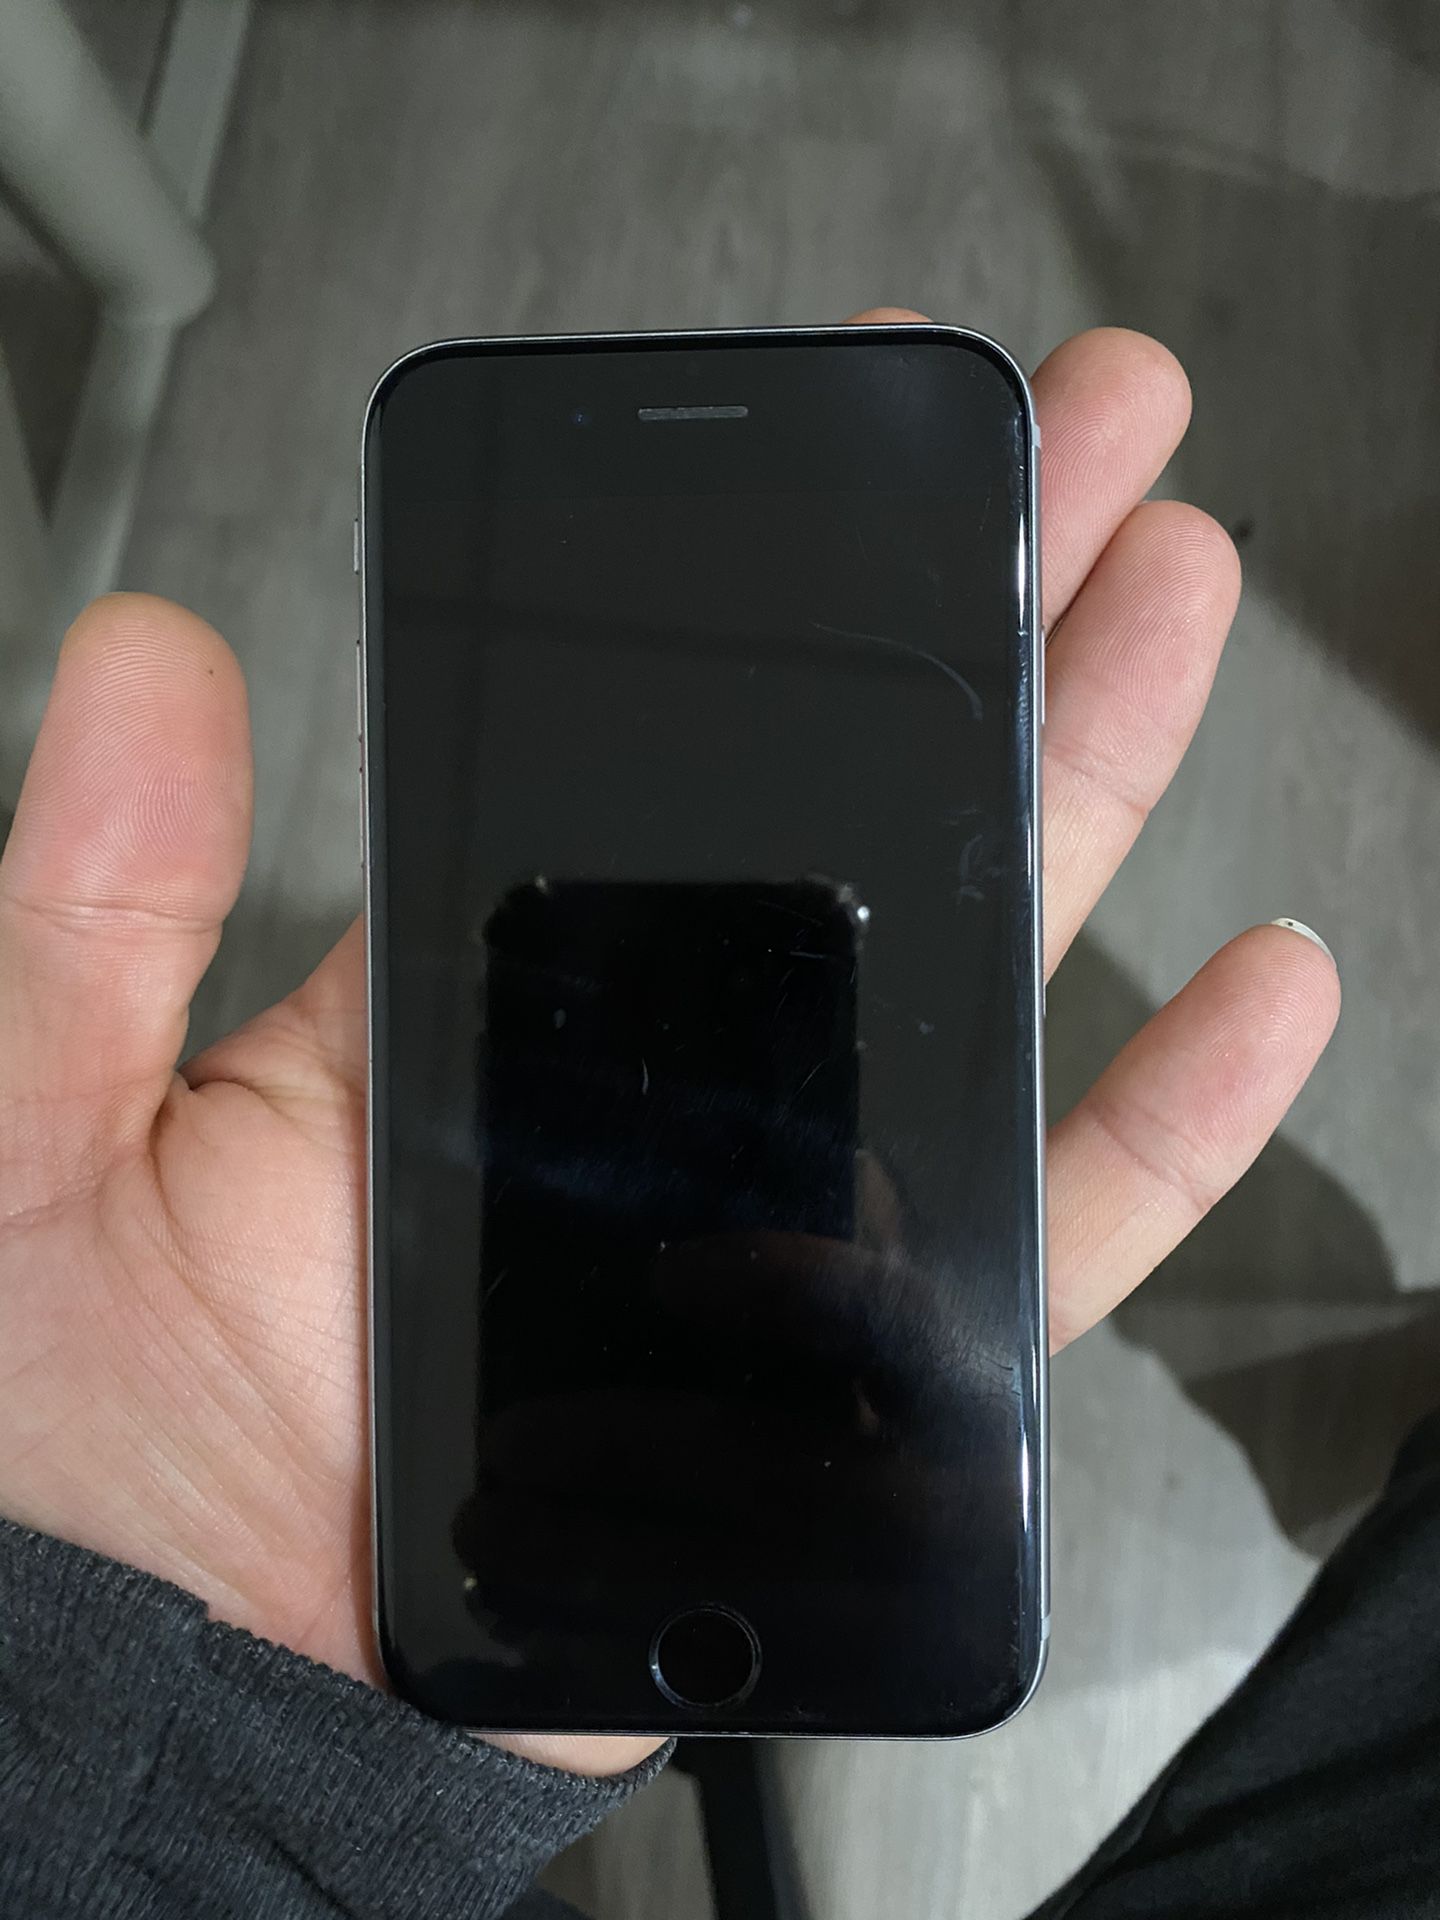 iPhone 6S 64 GB unlocked space gray